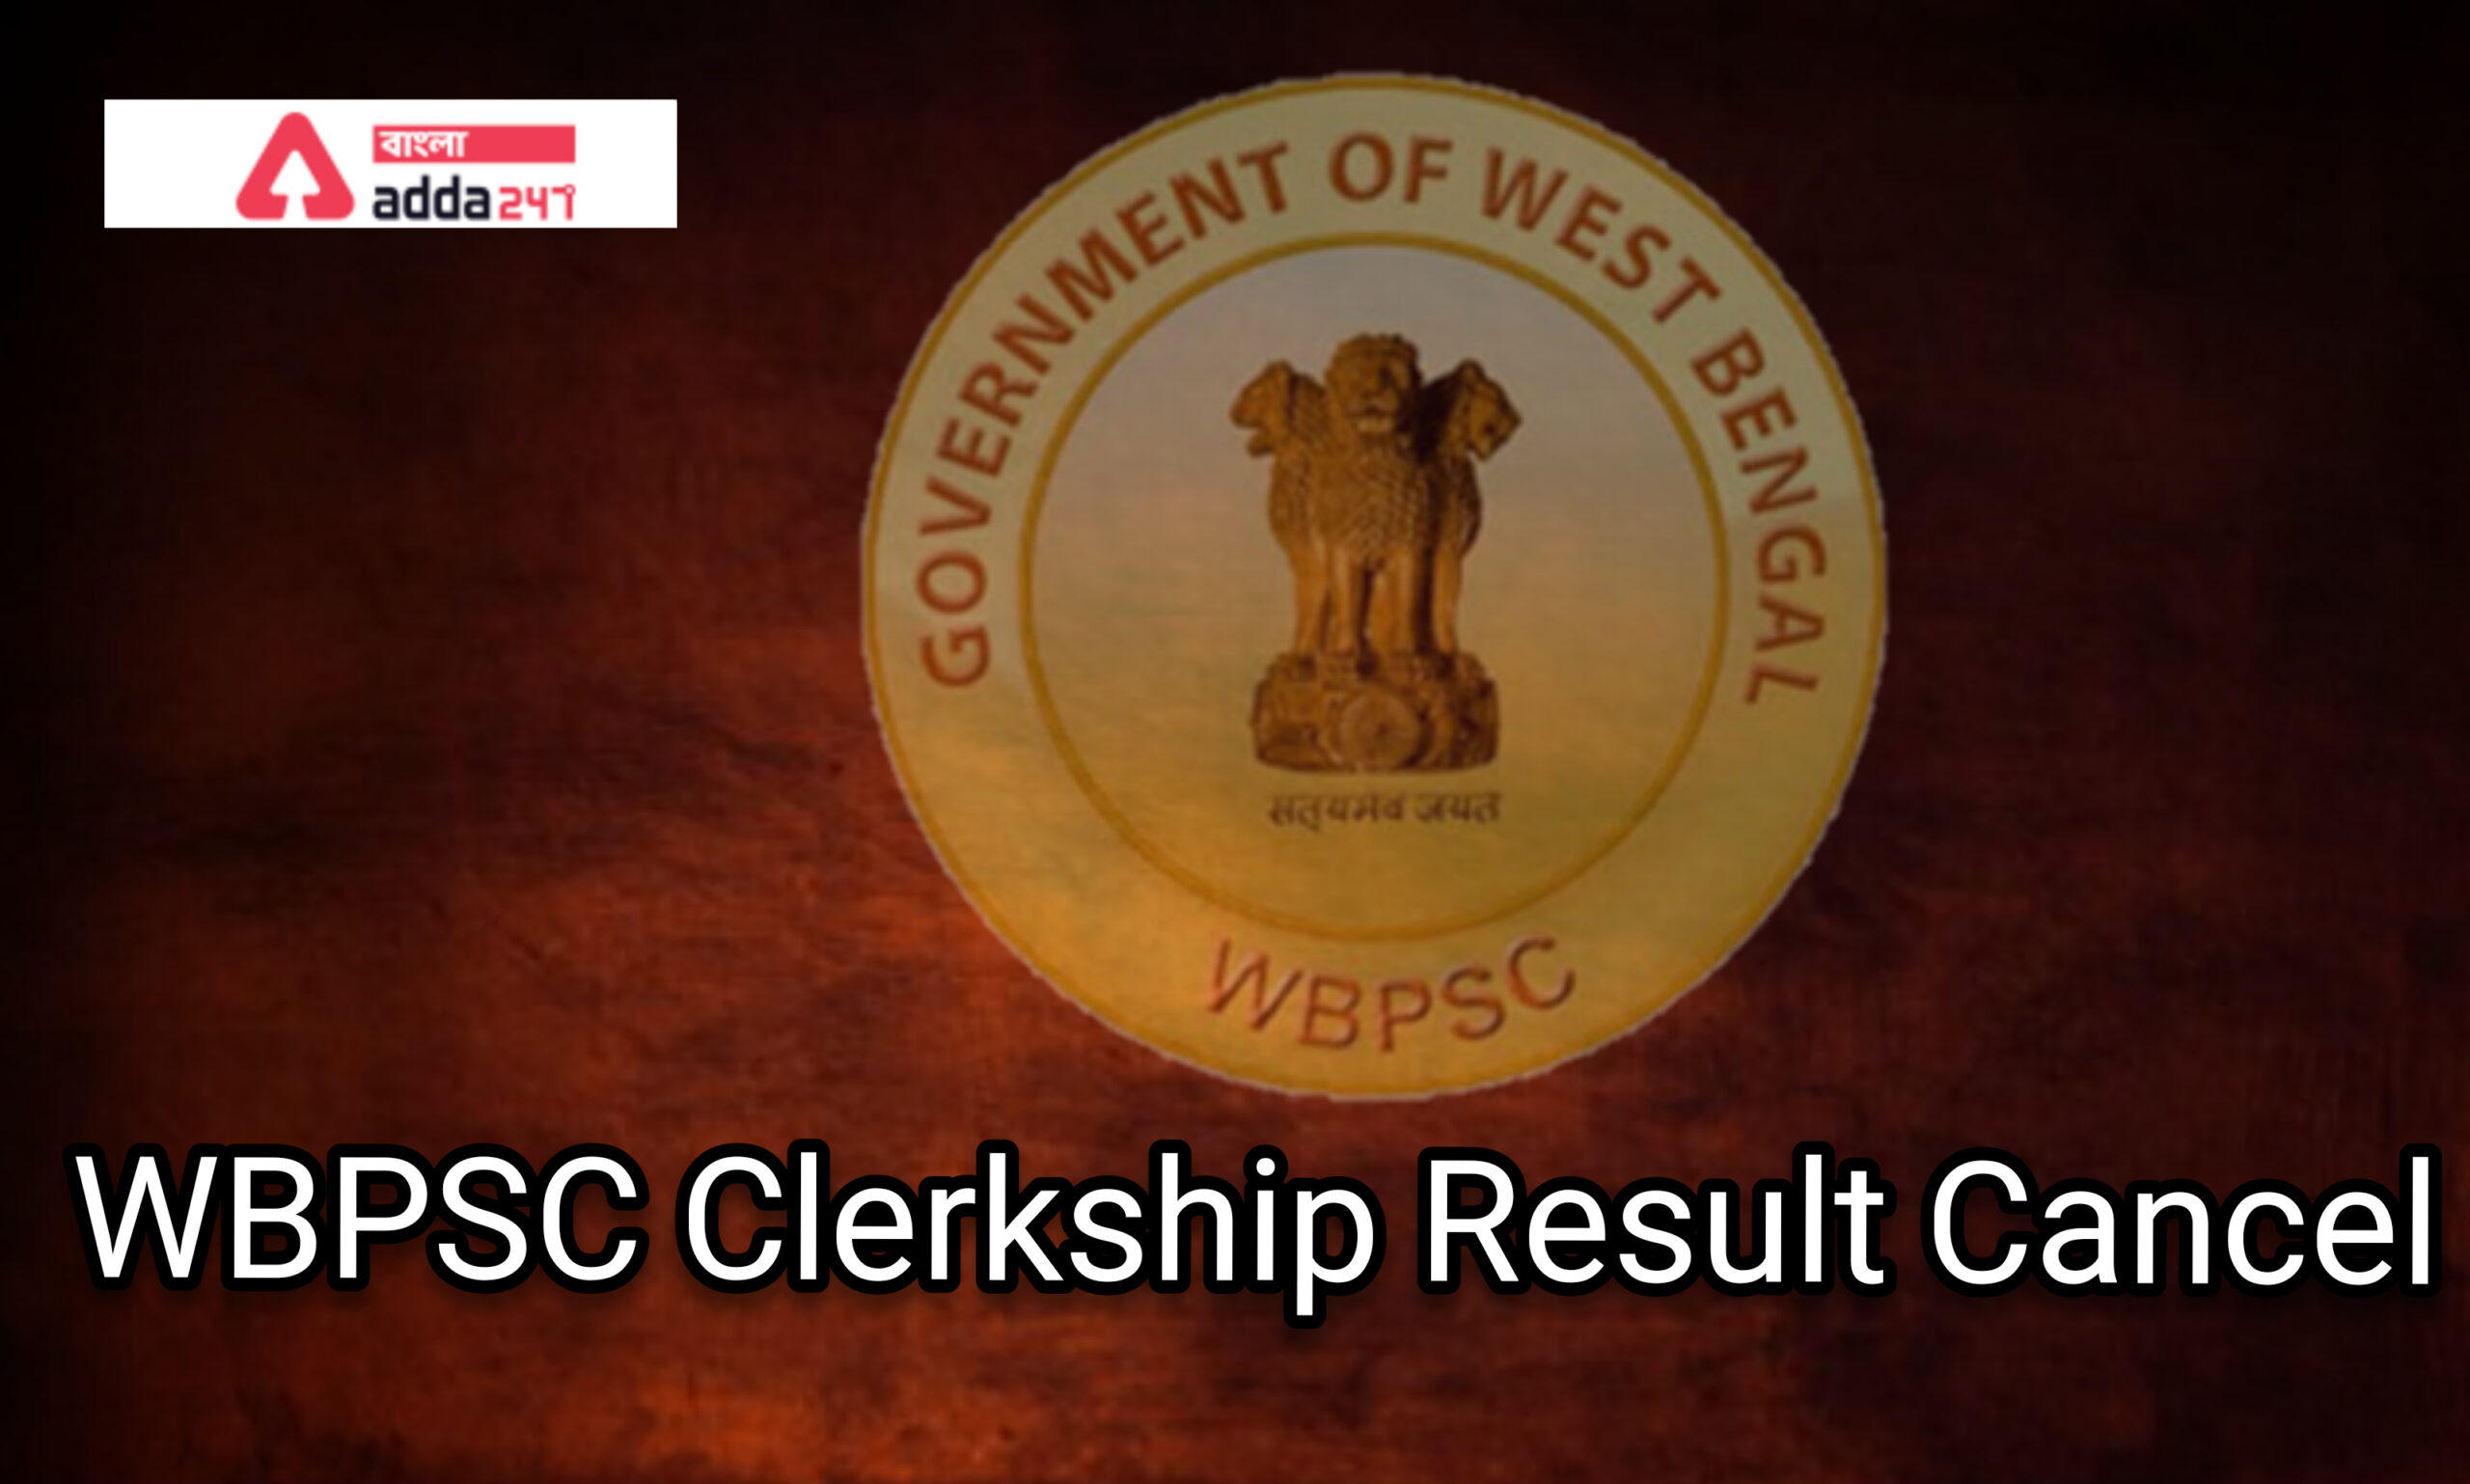 WBPSC Clerkship Result 2021 withdrawn